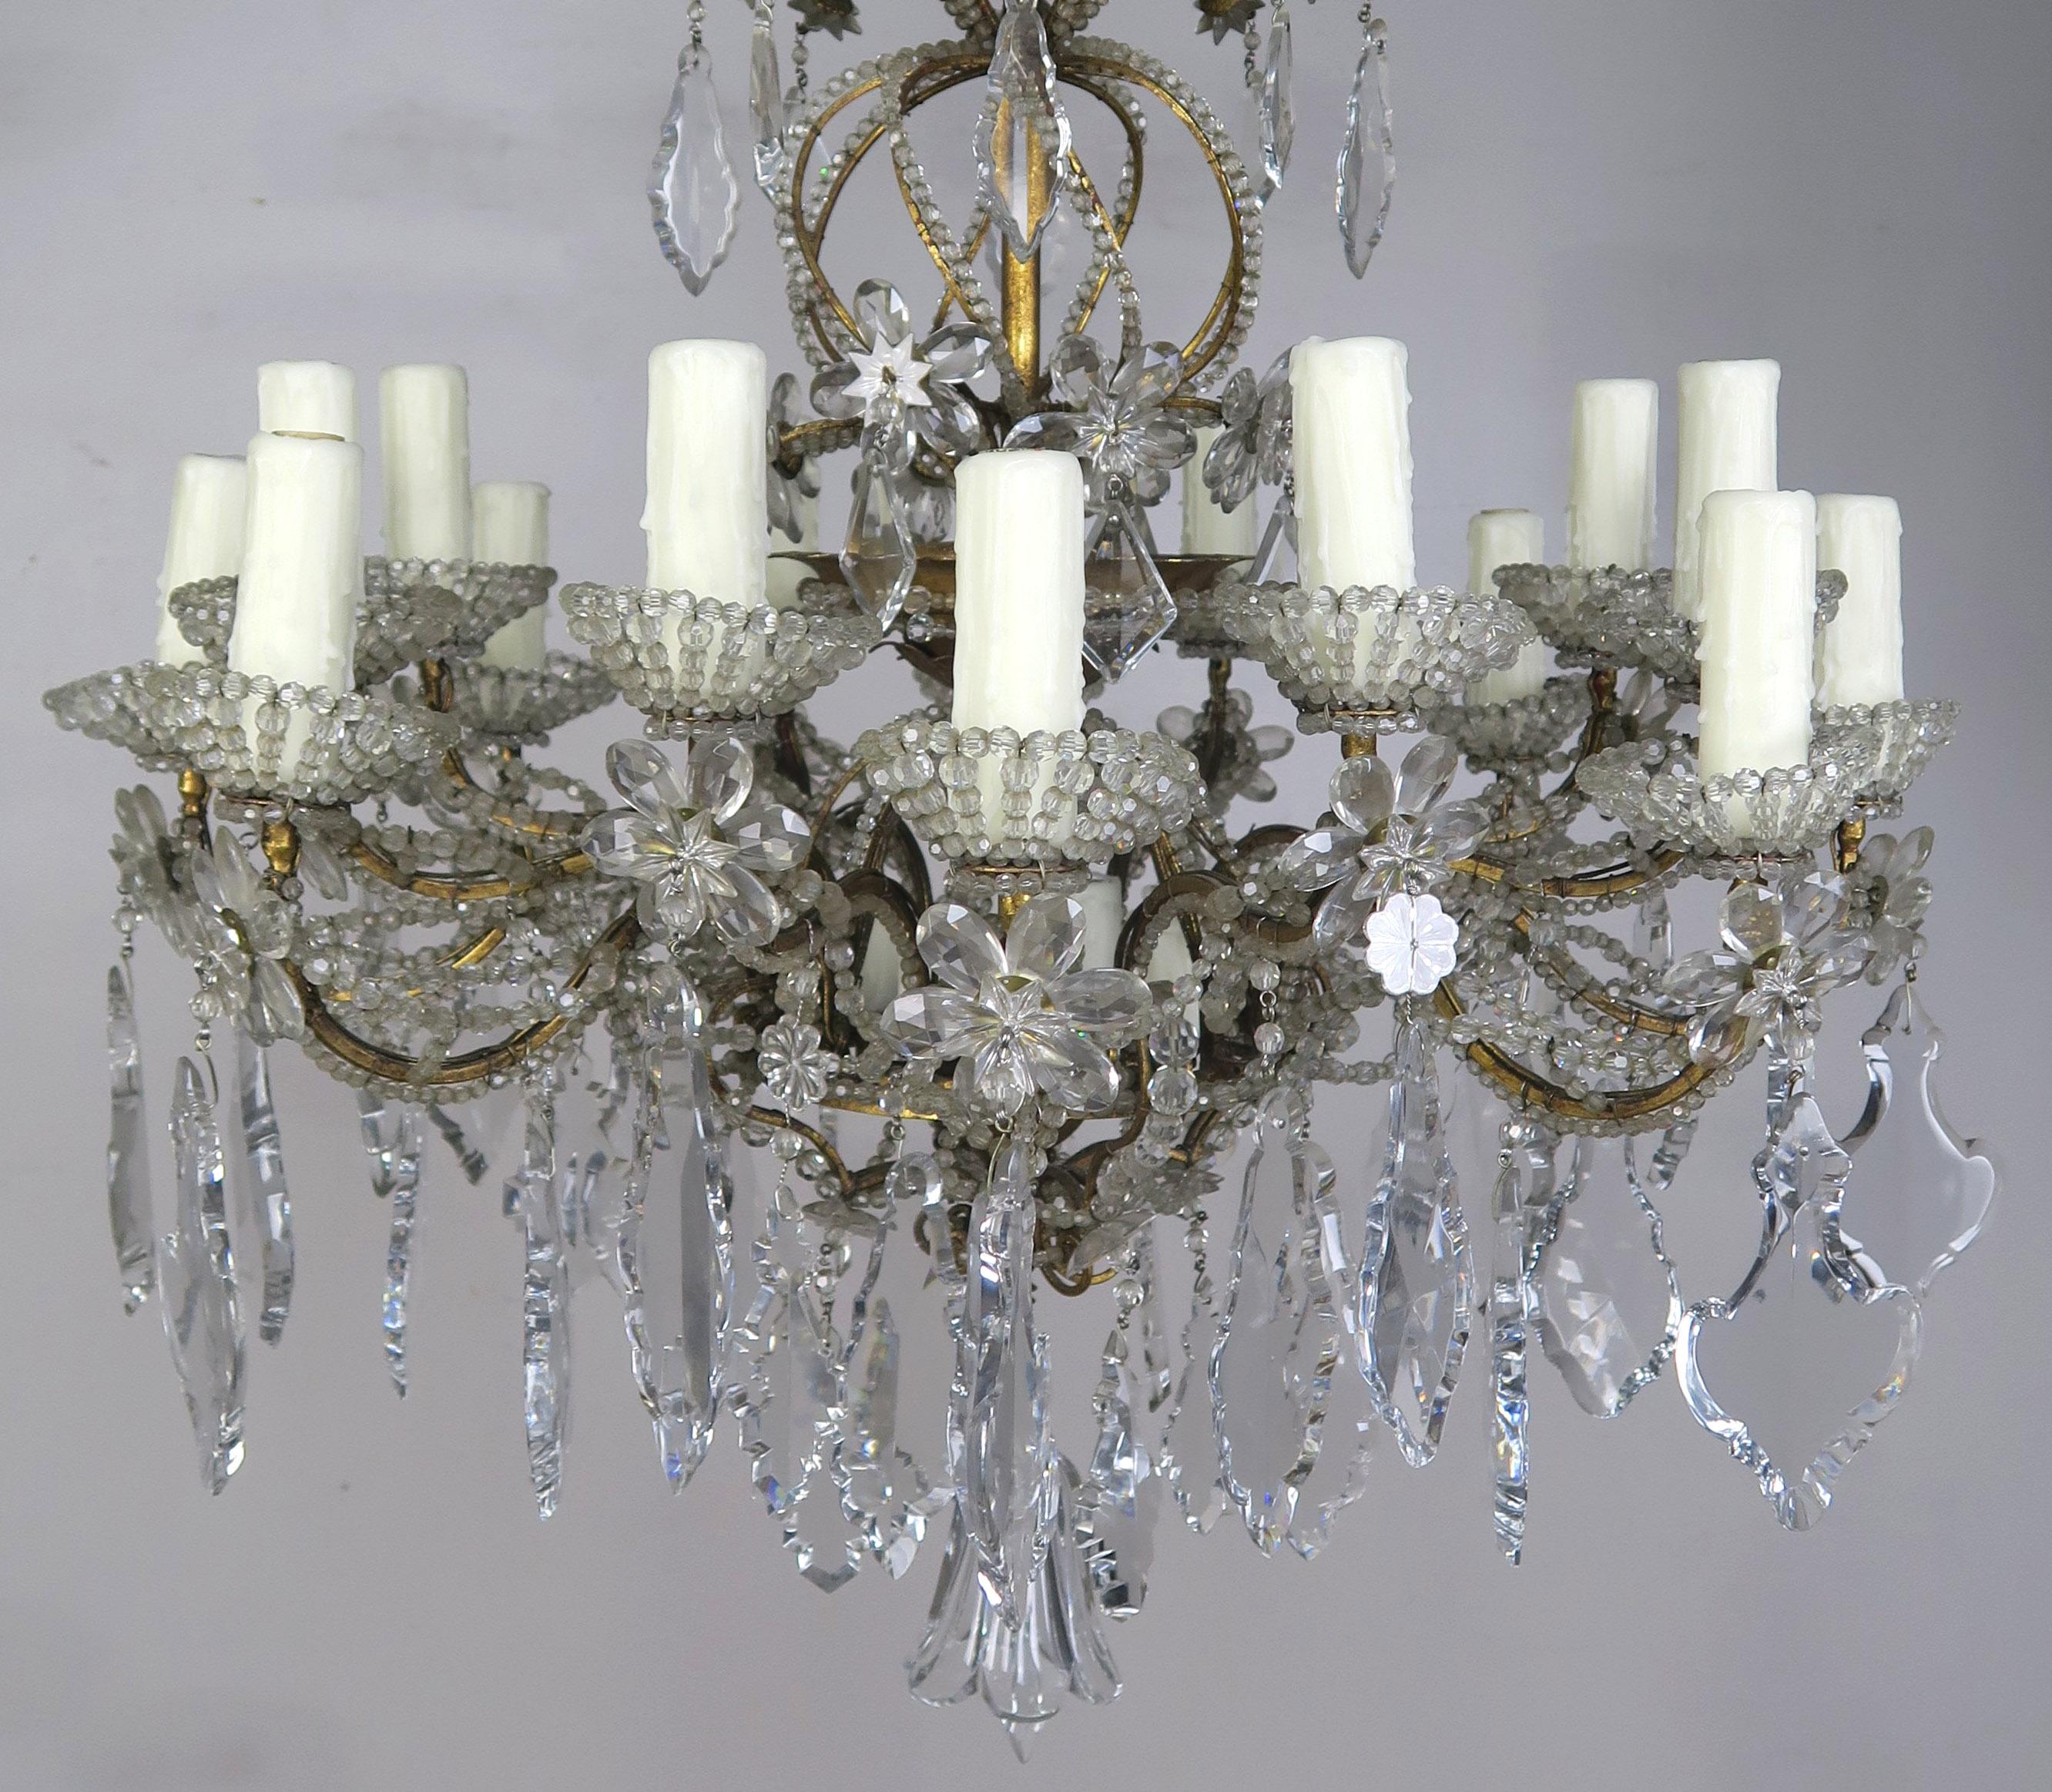 Rococo 20-light Italian Crystal Beaded Chandelier with Crystal Flowers